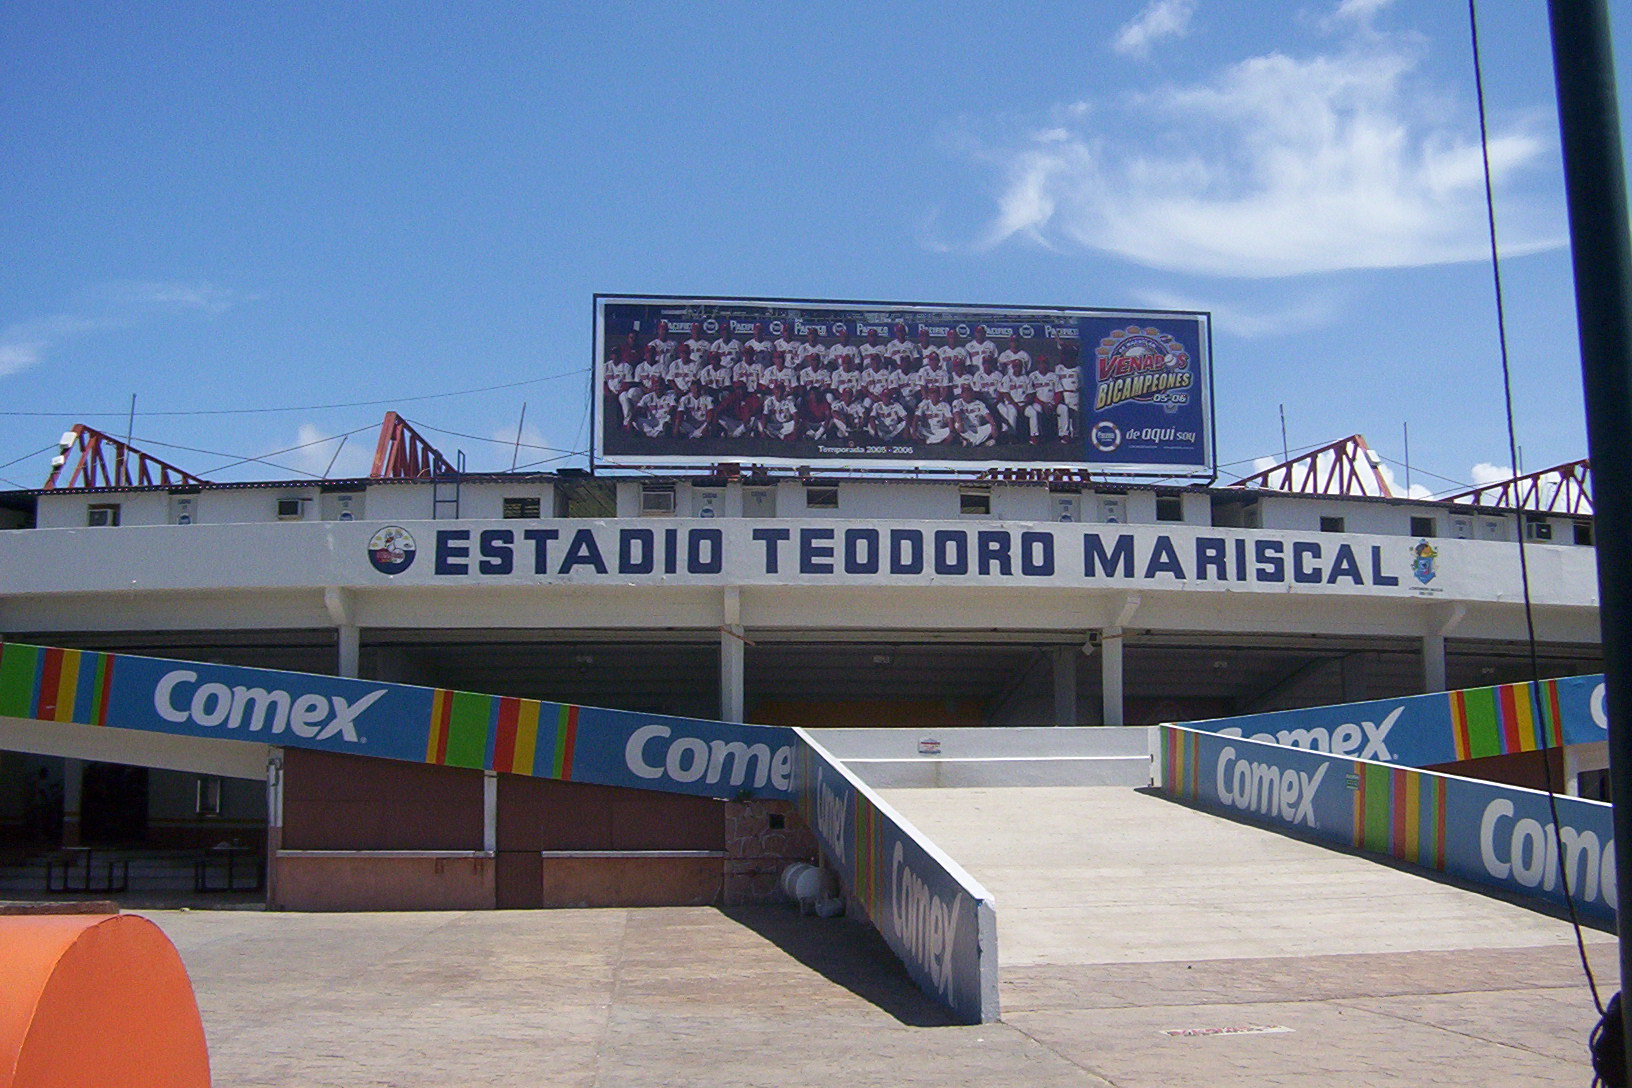 Baseball Stadium Teodoro Mariscal - Mazatlán